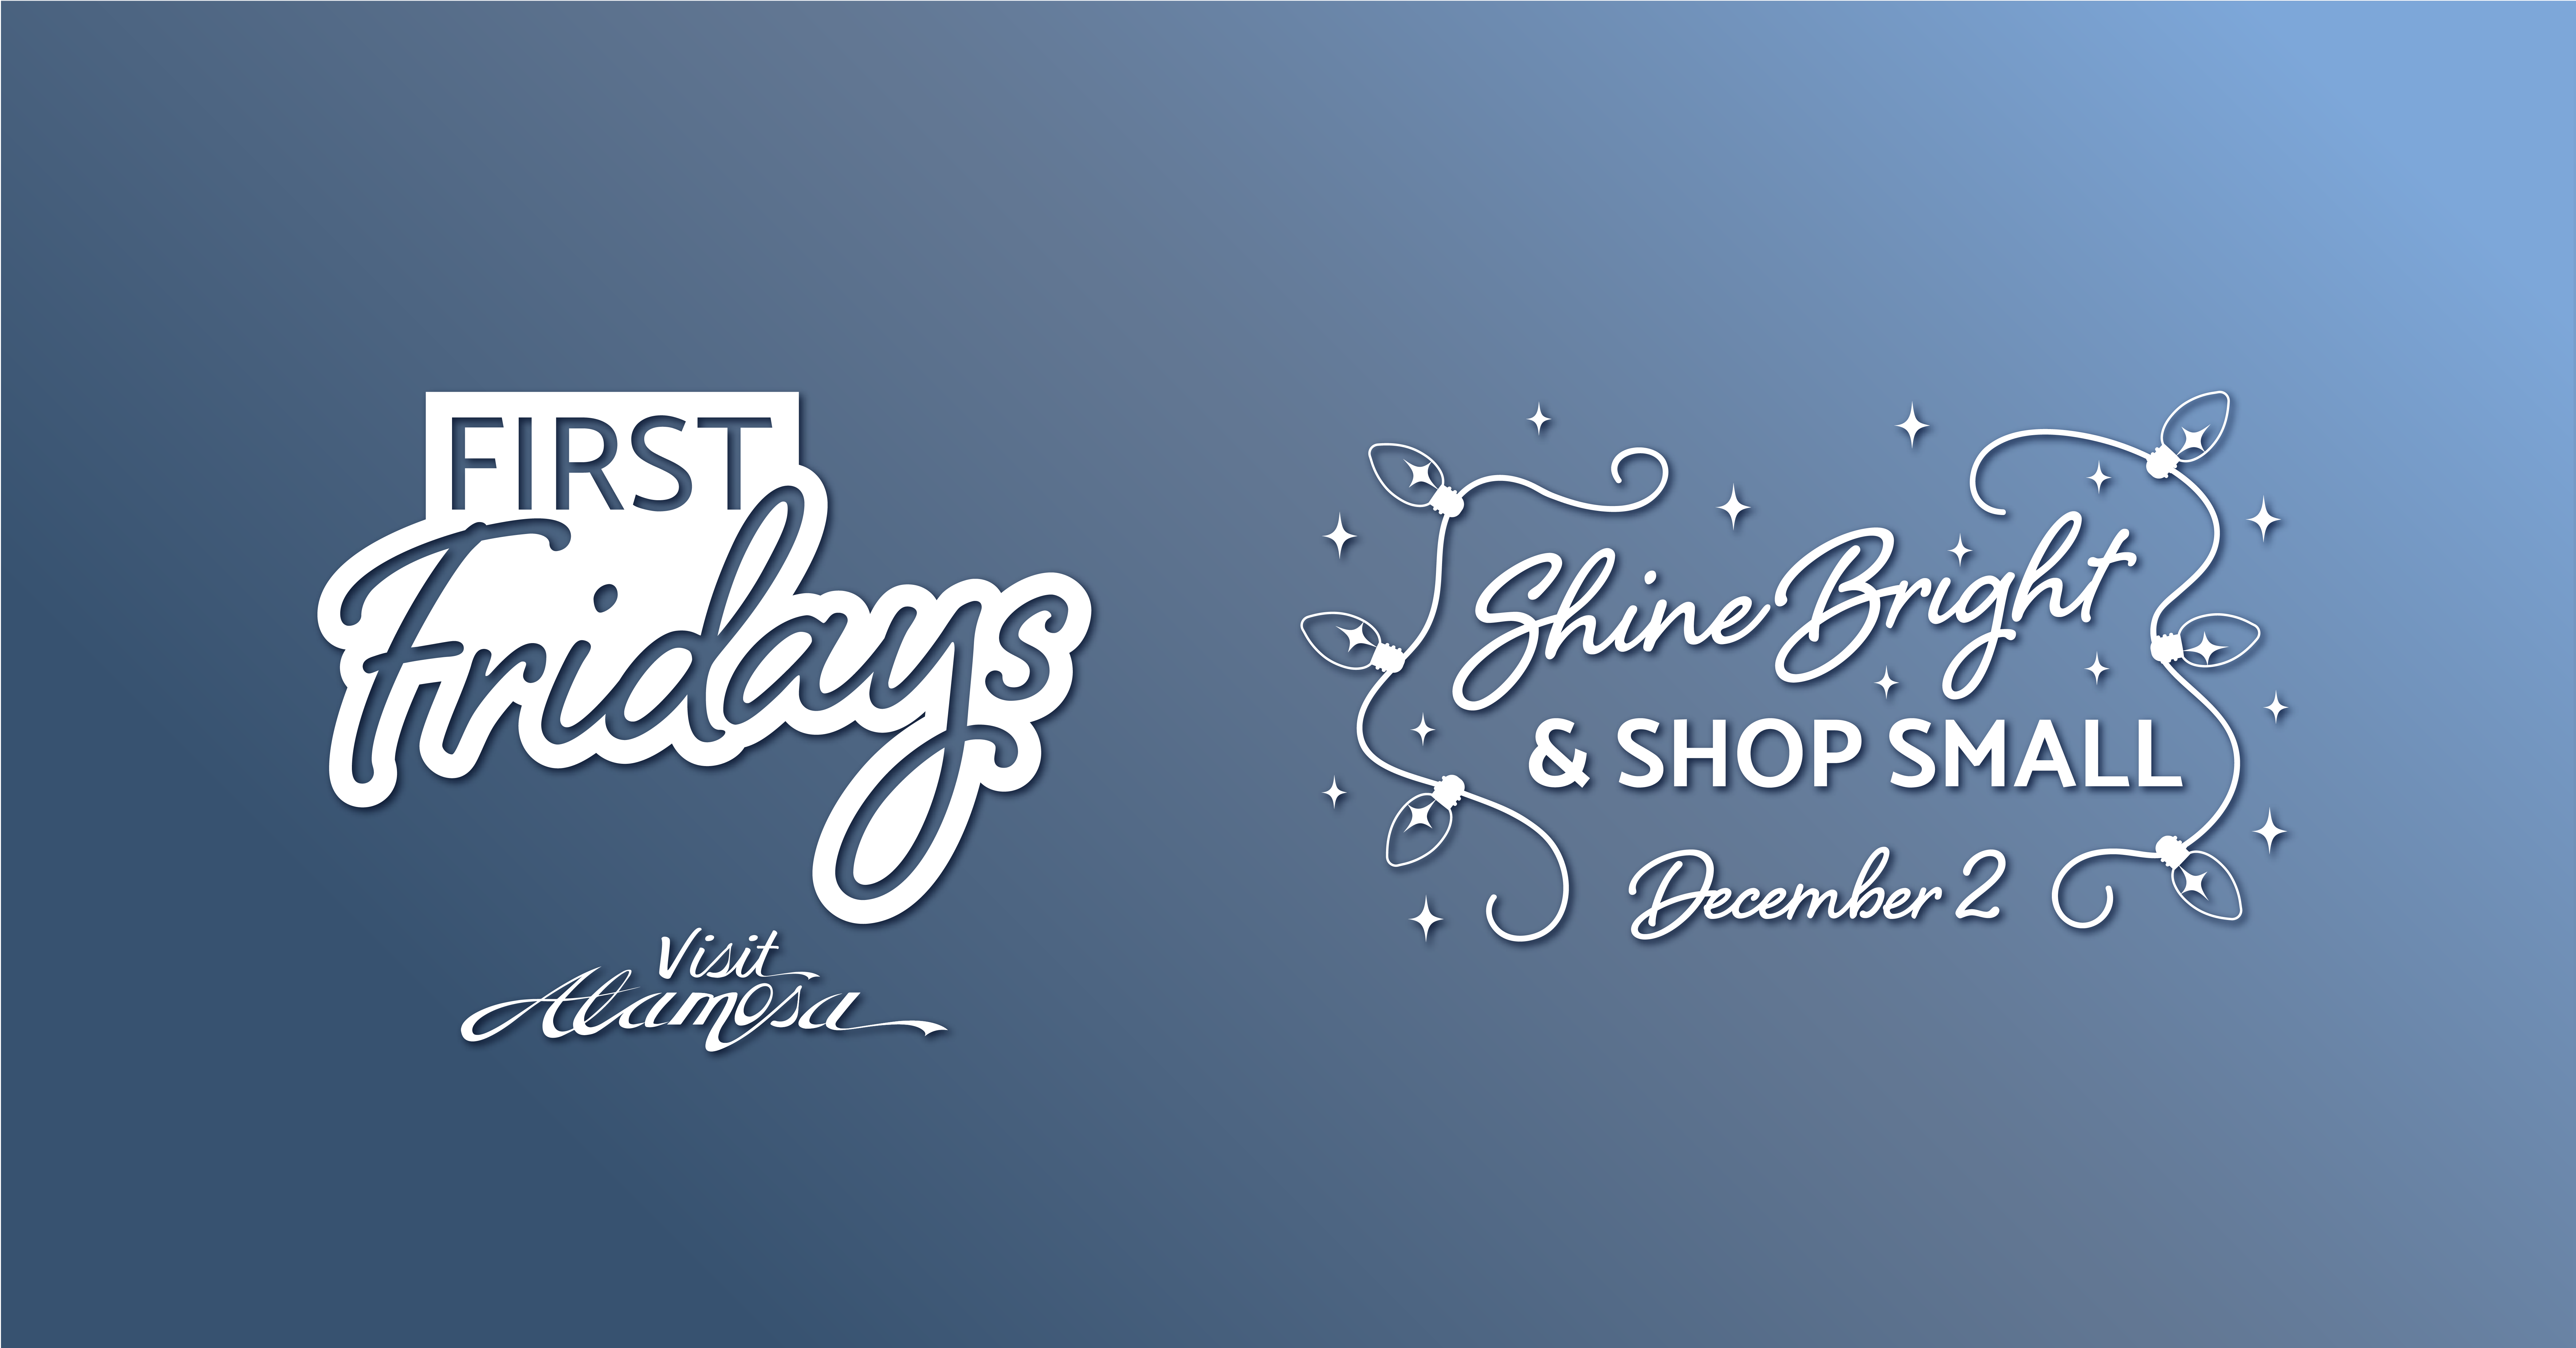 First Fridays December 2: Shine Bright & Shop Small